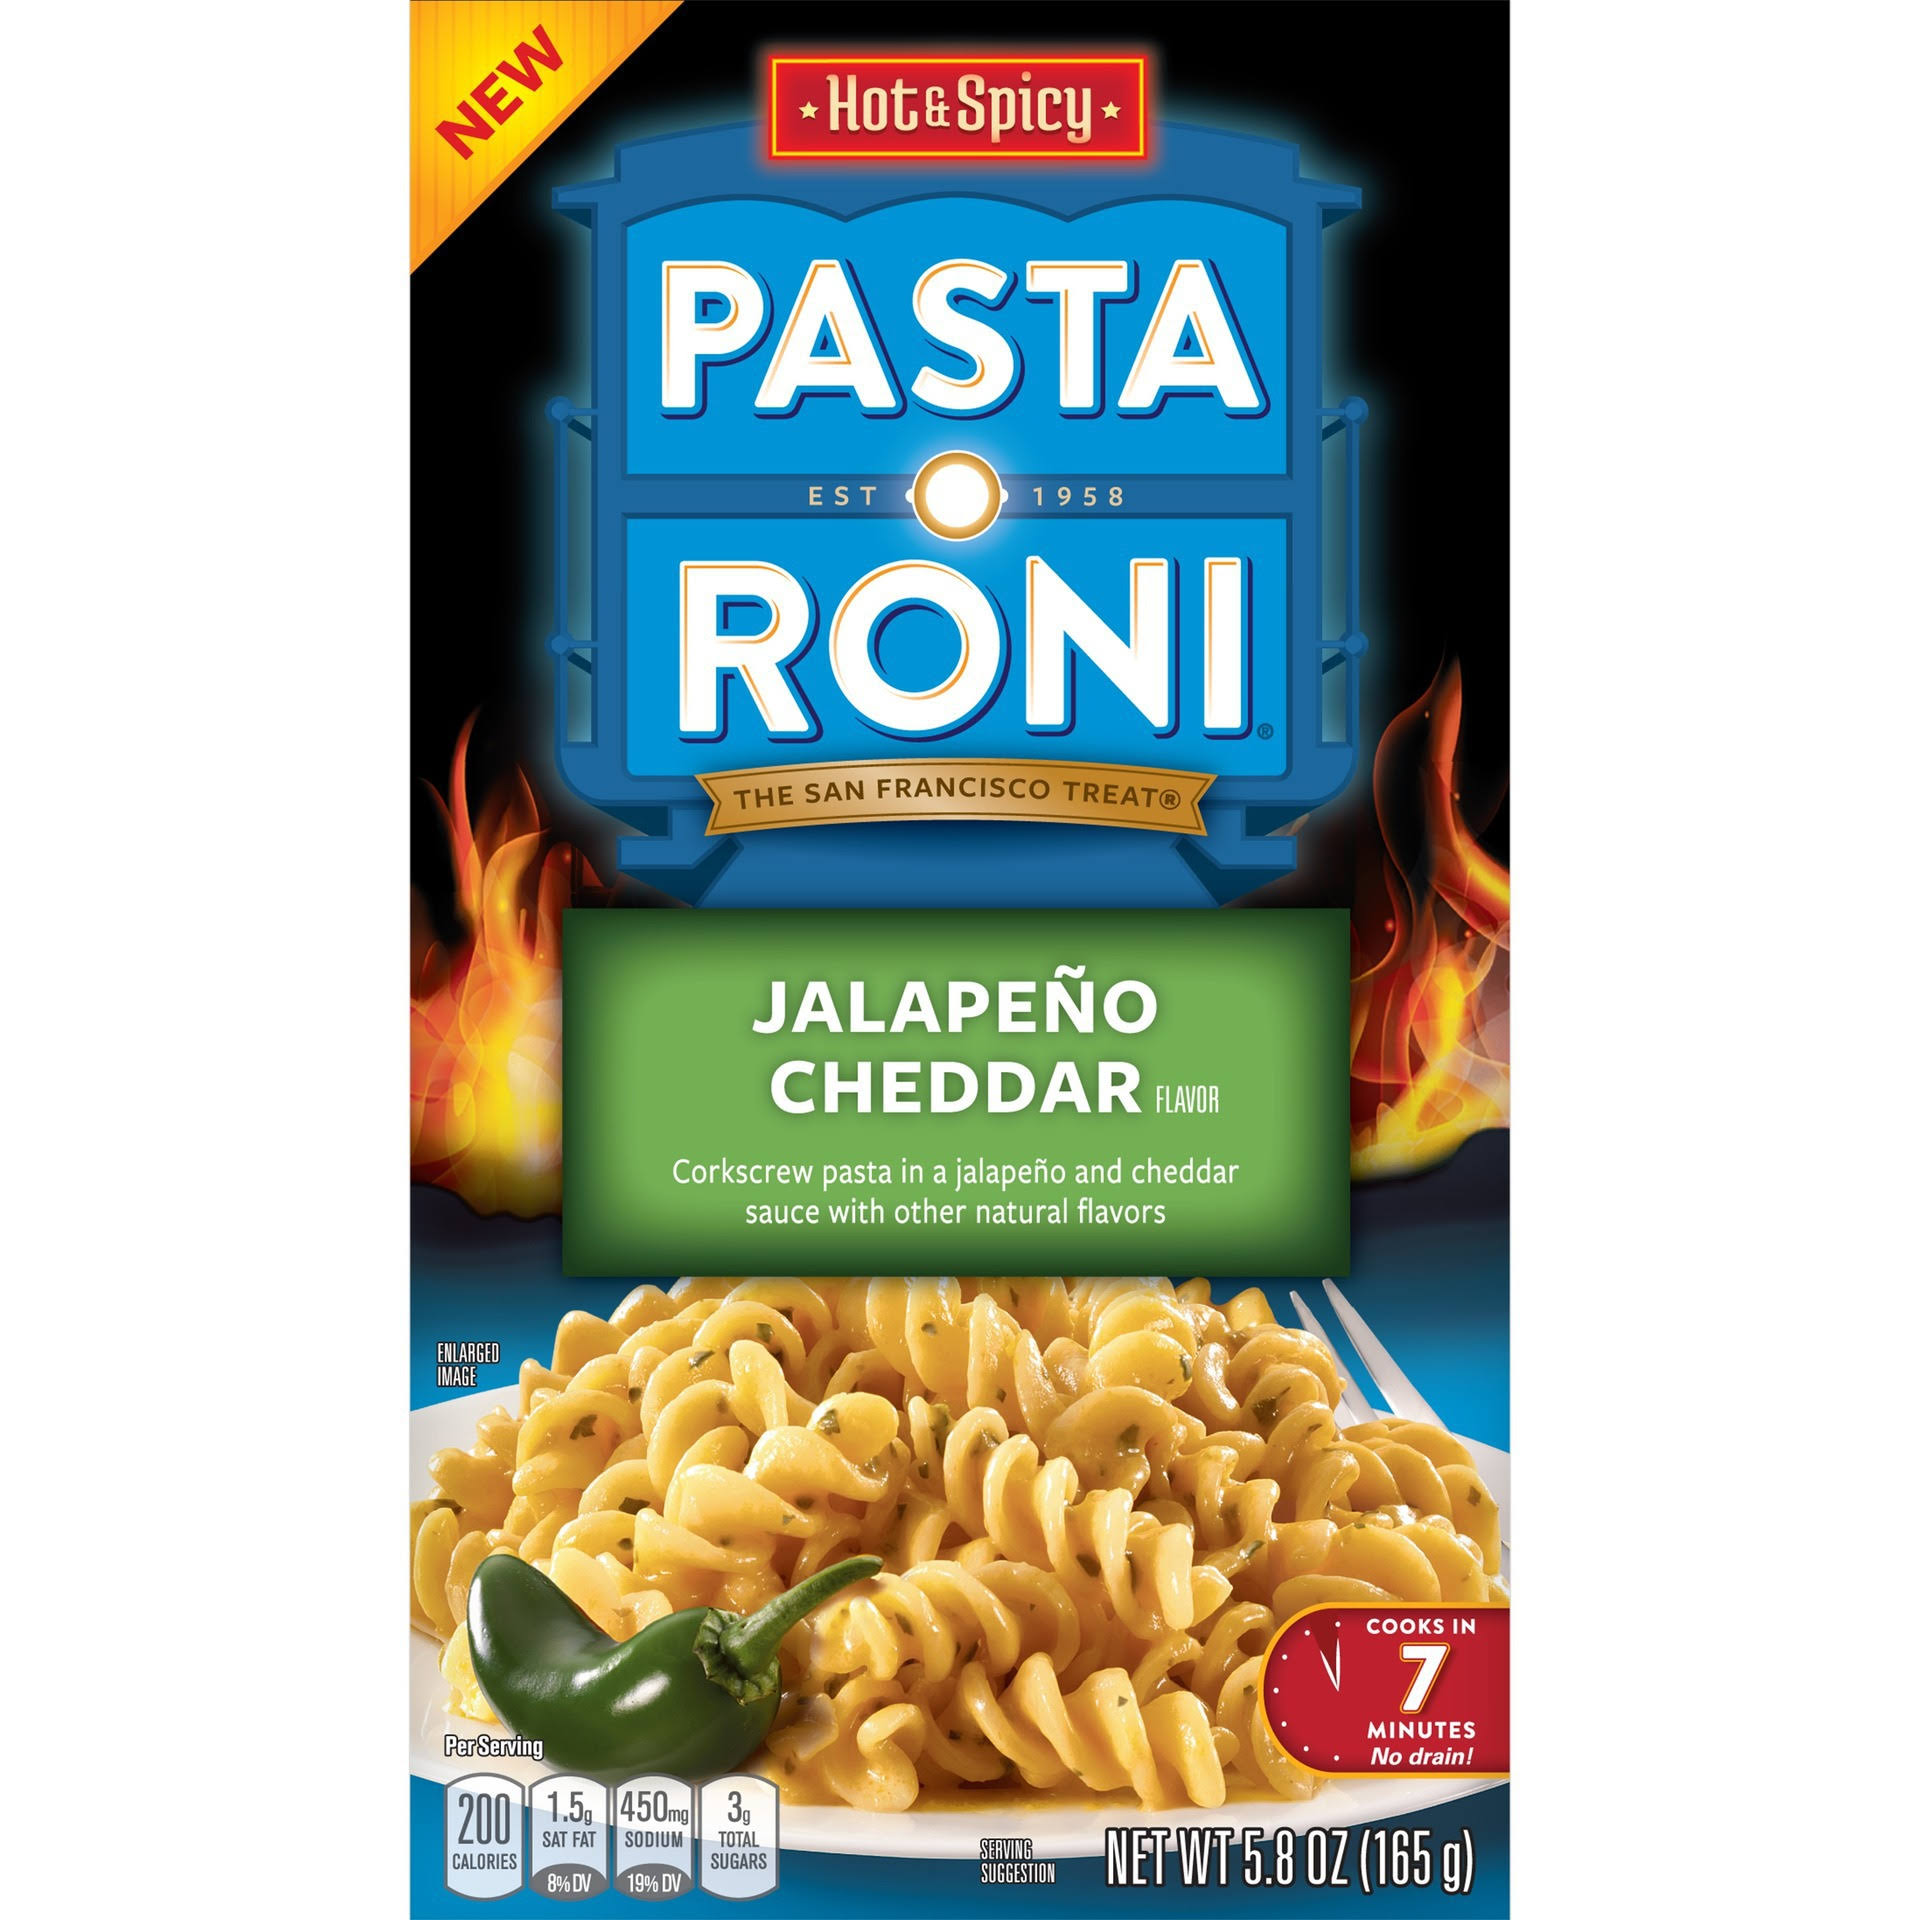 Pasta Roni Pasta, Jalapeno Cheddar Flavor, Hot & Spicy - 5.8 oz